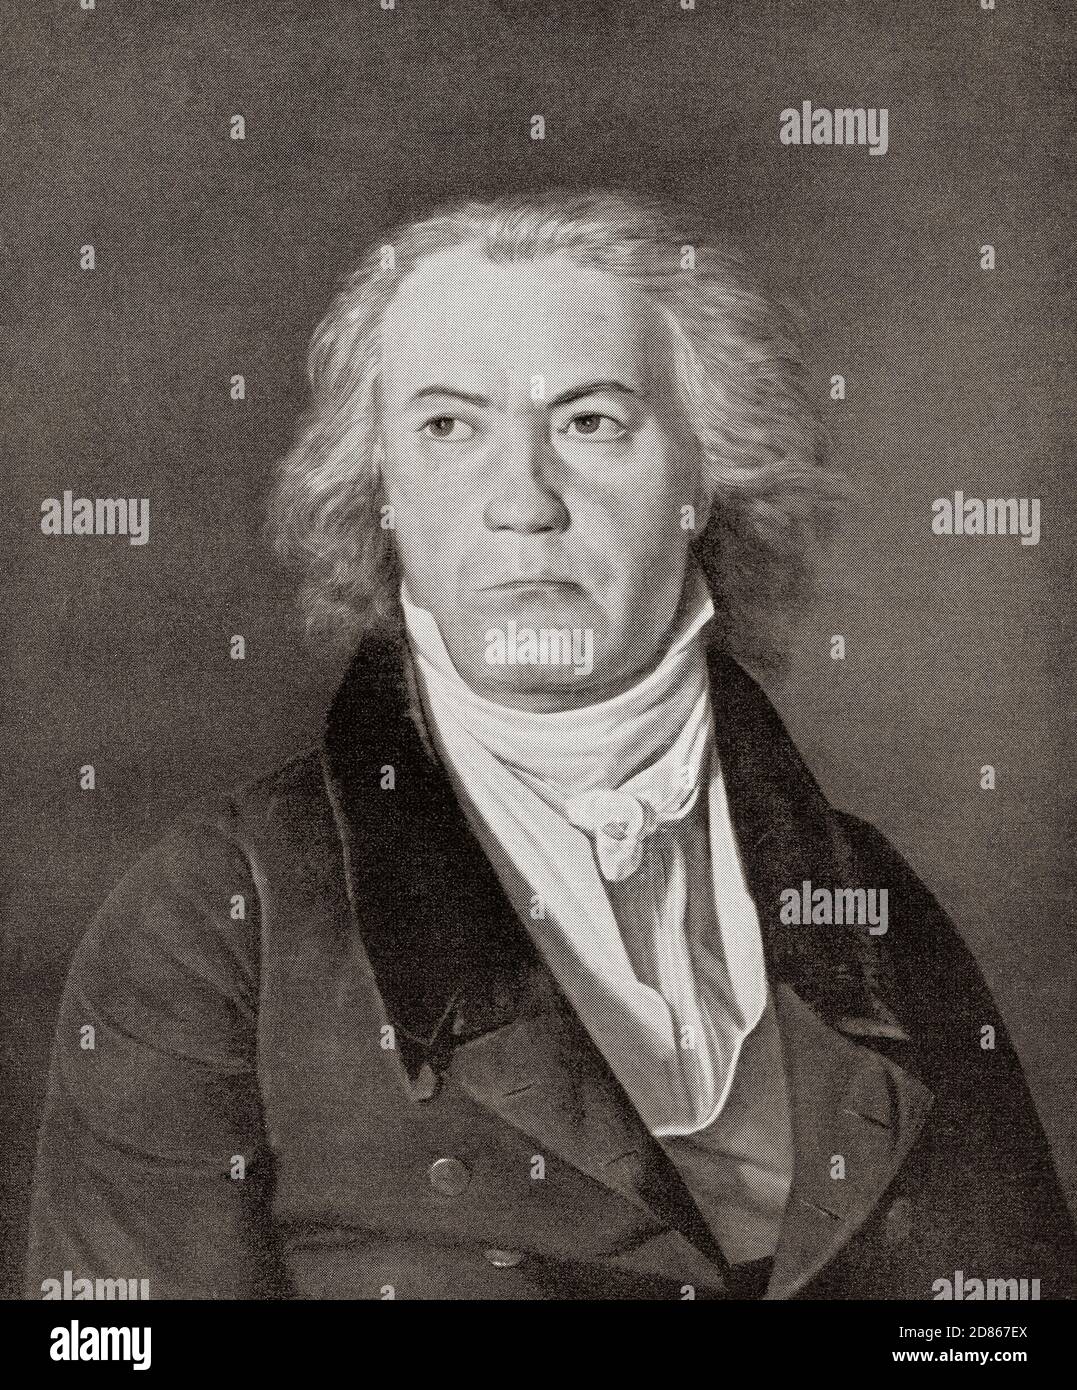 Ludwig van Beethoven, 1770 – 1827, seen here aged 53. German composer and pianist. From Ludwig van Beethoven, 1770 - 1827, Sein Leben in Bildern (His Life in Pictures) Stock Photo